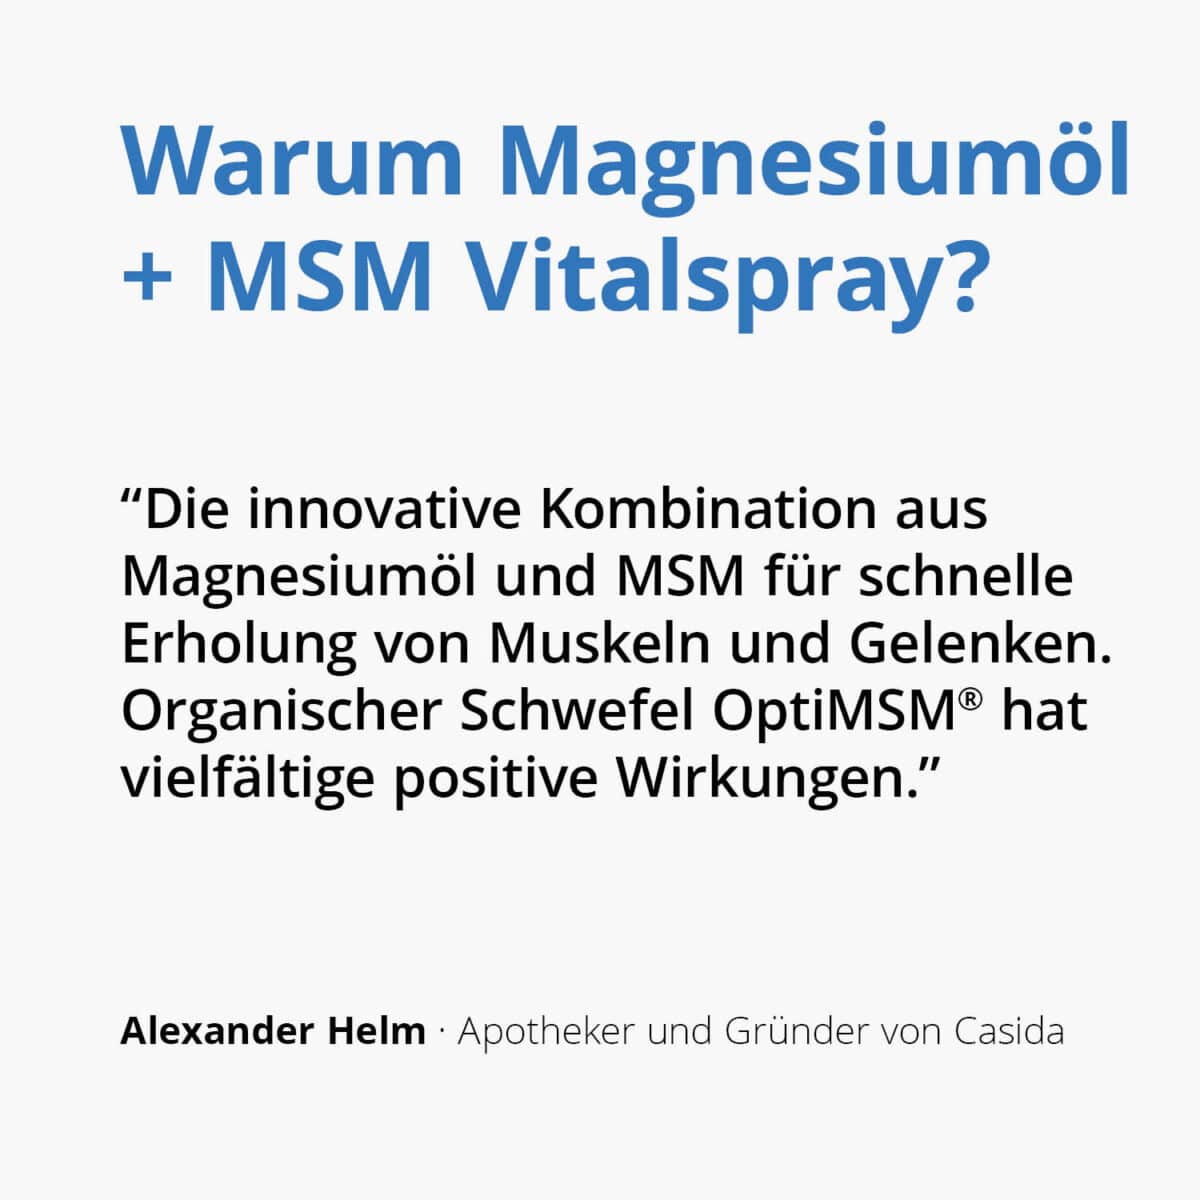 Magnesiumöl + MSM Vitalspray